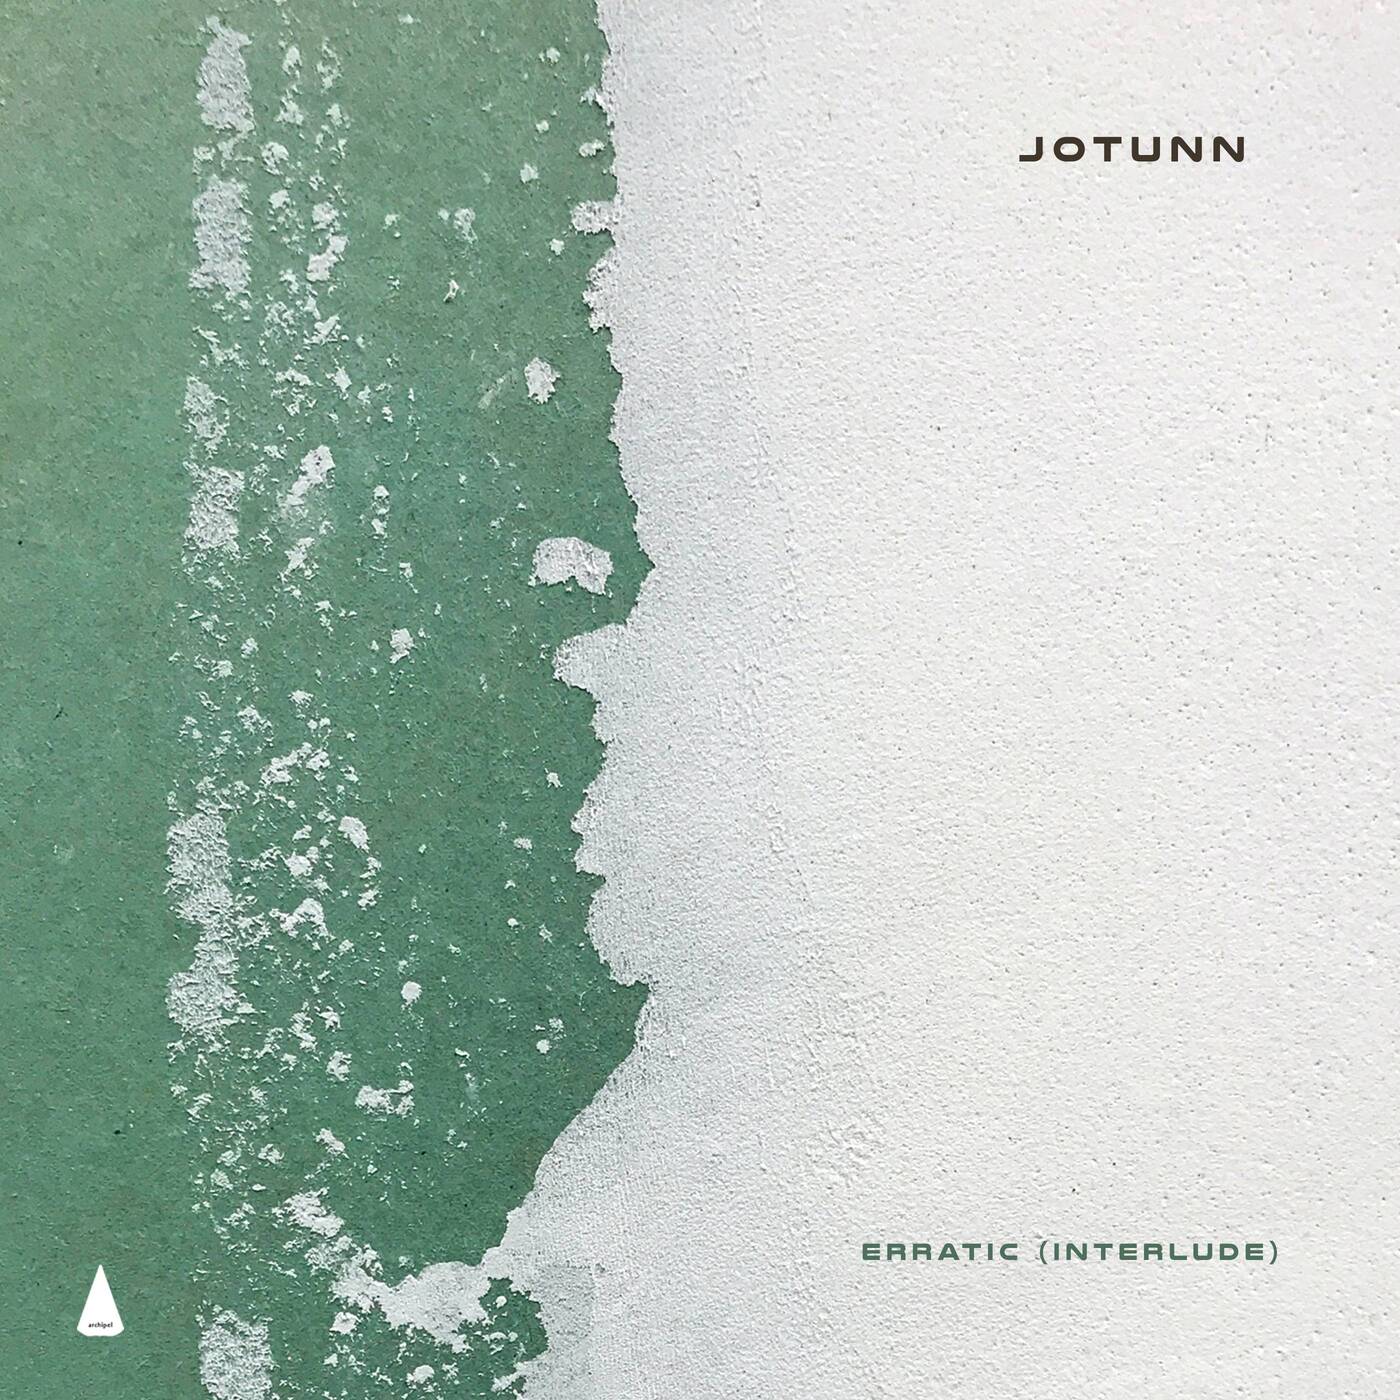 Jotunn – Erratic (Interlude)